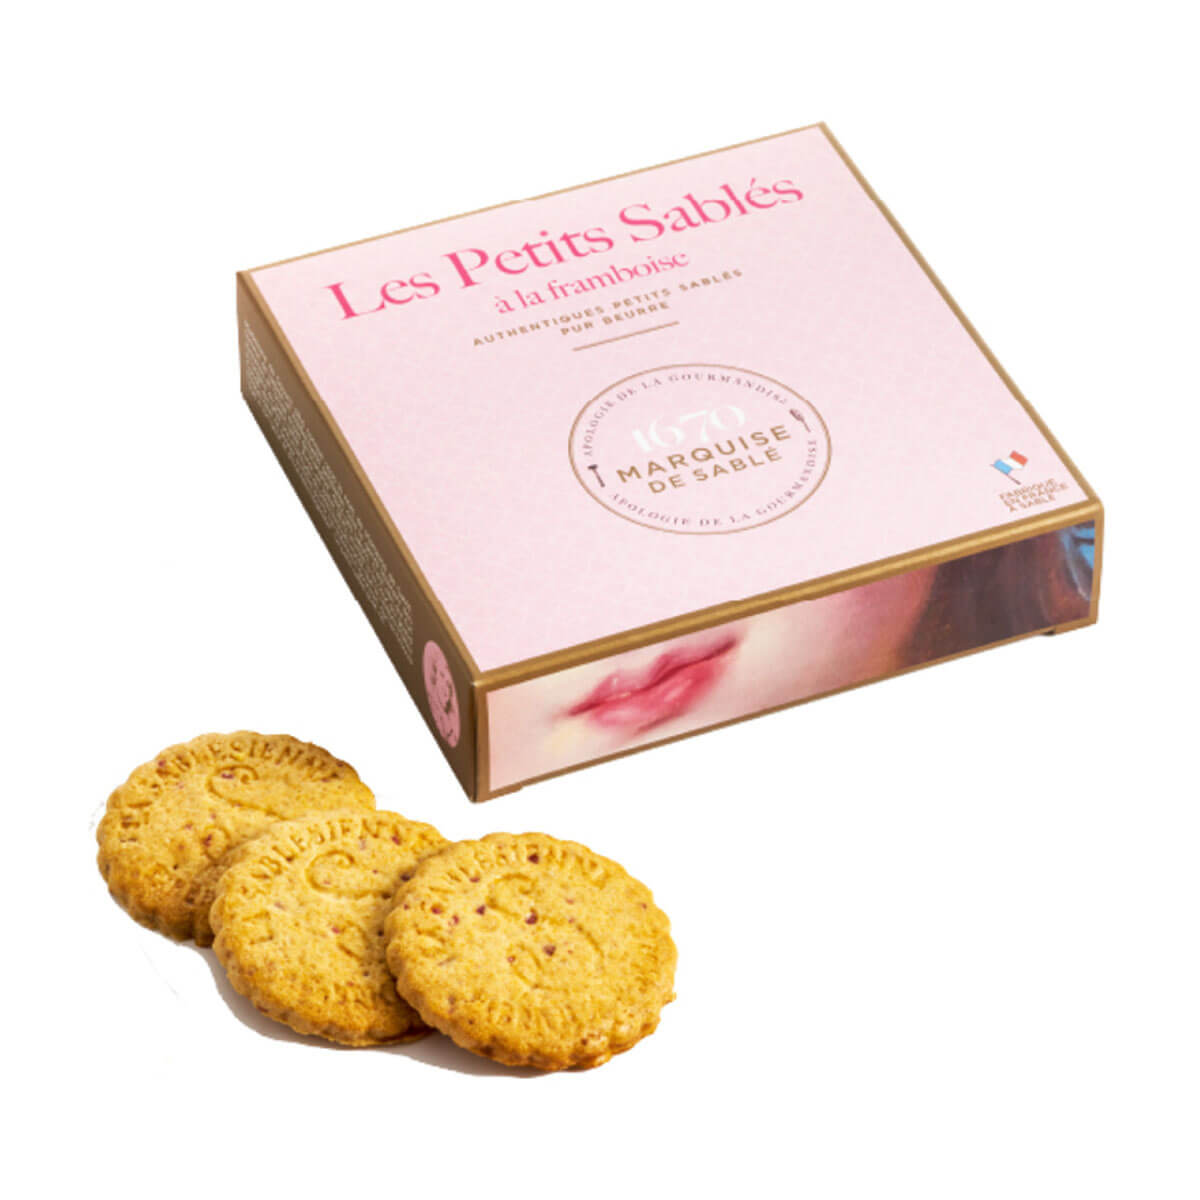 La Sablesienne Shortbread Cookies with Raspberry front | MILK MONEY milkmoney.co | white elephant gift ideas, gift, mother's day gift ideas, white elephant gift, gift shops near me